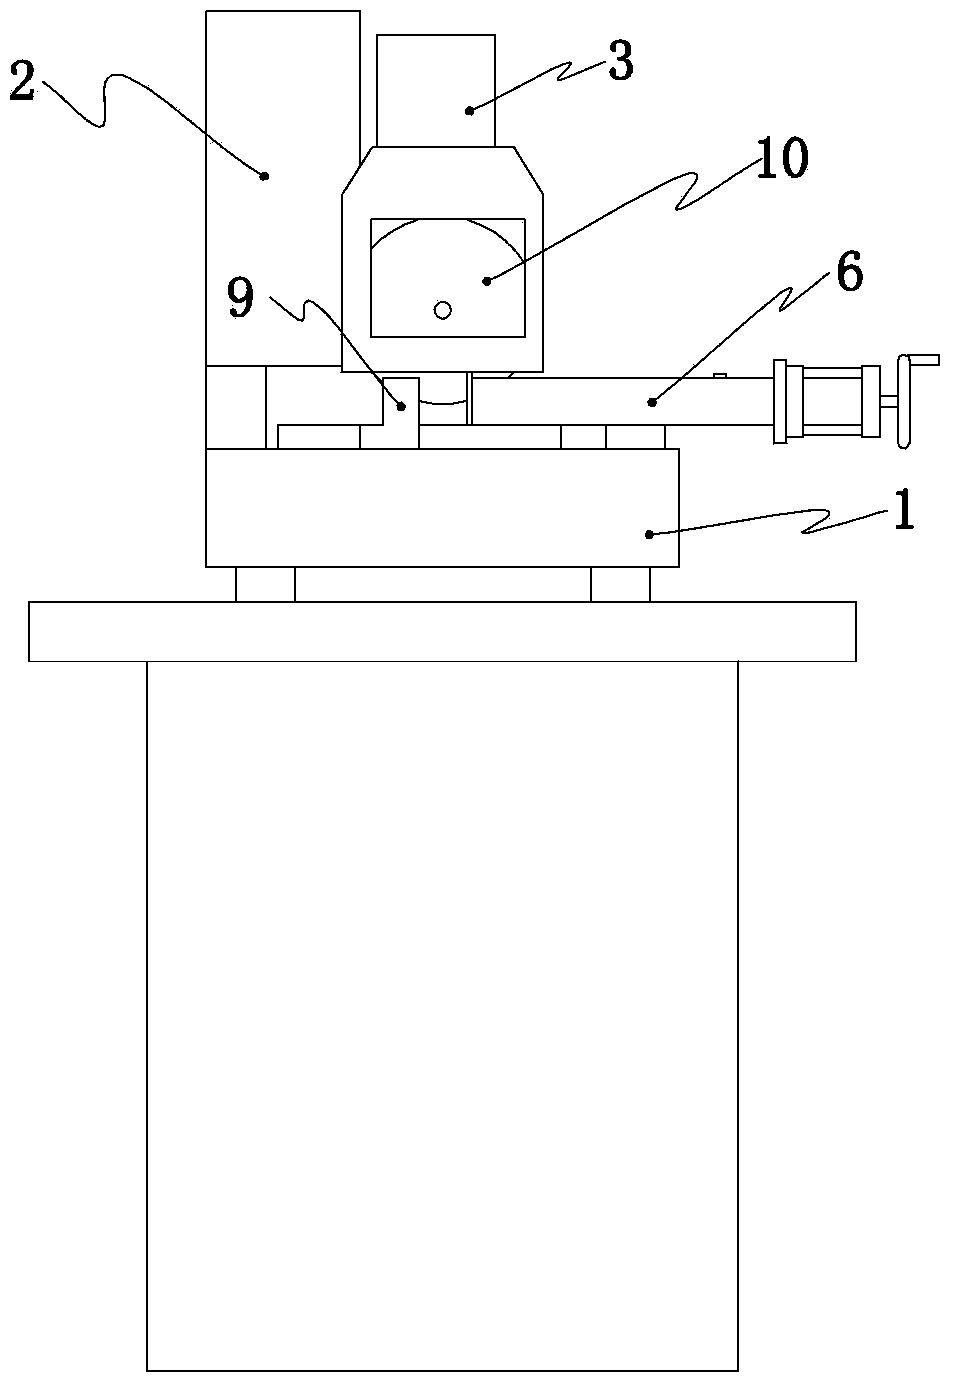 Reduction gear of vertical type circular sawing machine